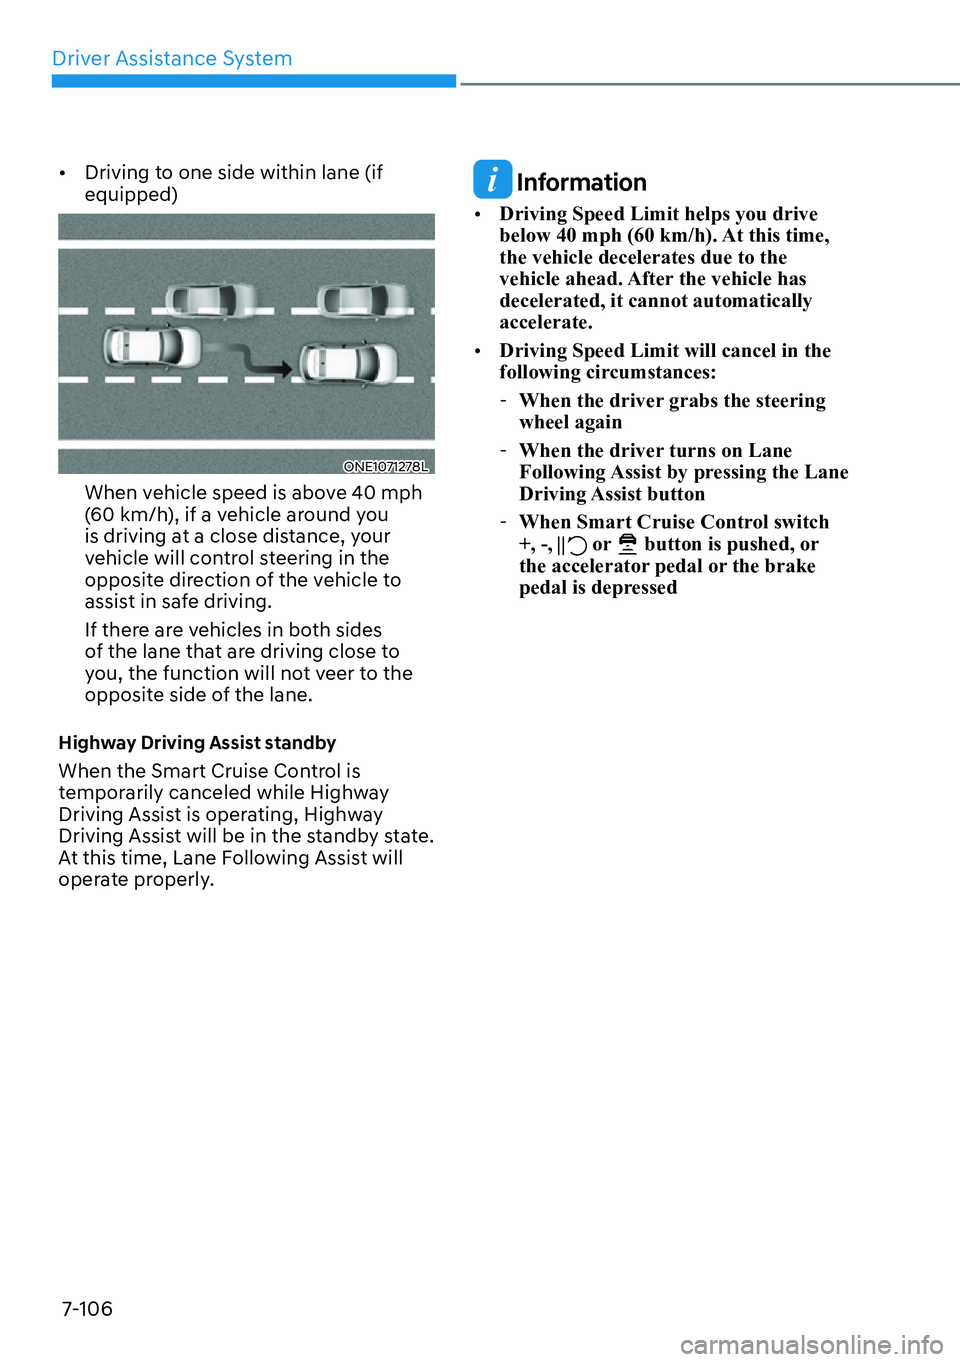 HYUNDAI IONIQ 5 2022 Service Manual Driver Assistance System
7-106
[�Driving to one side within lane (if 
equipped)
ONE1071278L
When vehicle speed is above 40 mph 
(60 km/h), if a vehicle around you 
is driving at a close distance, yo